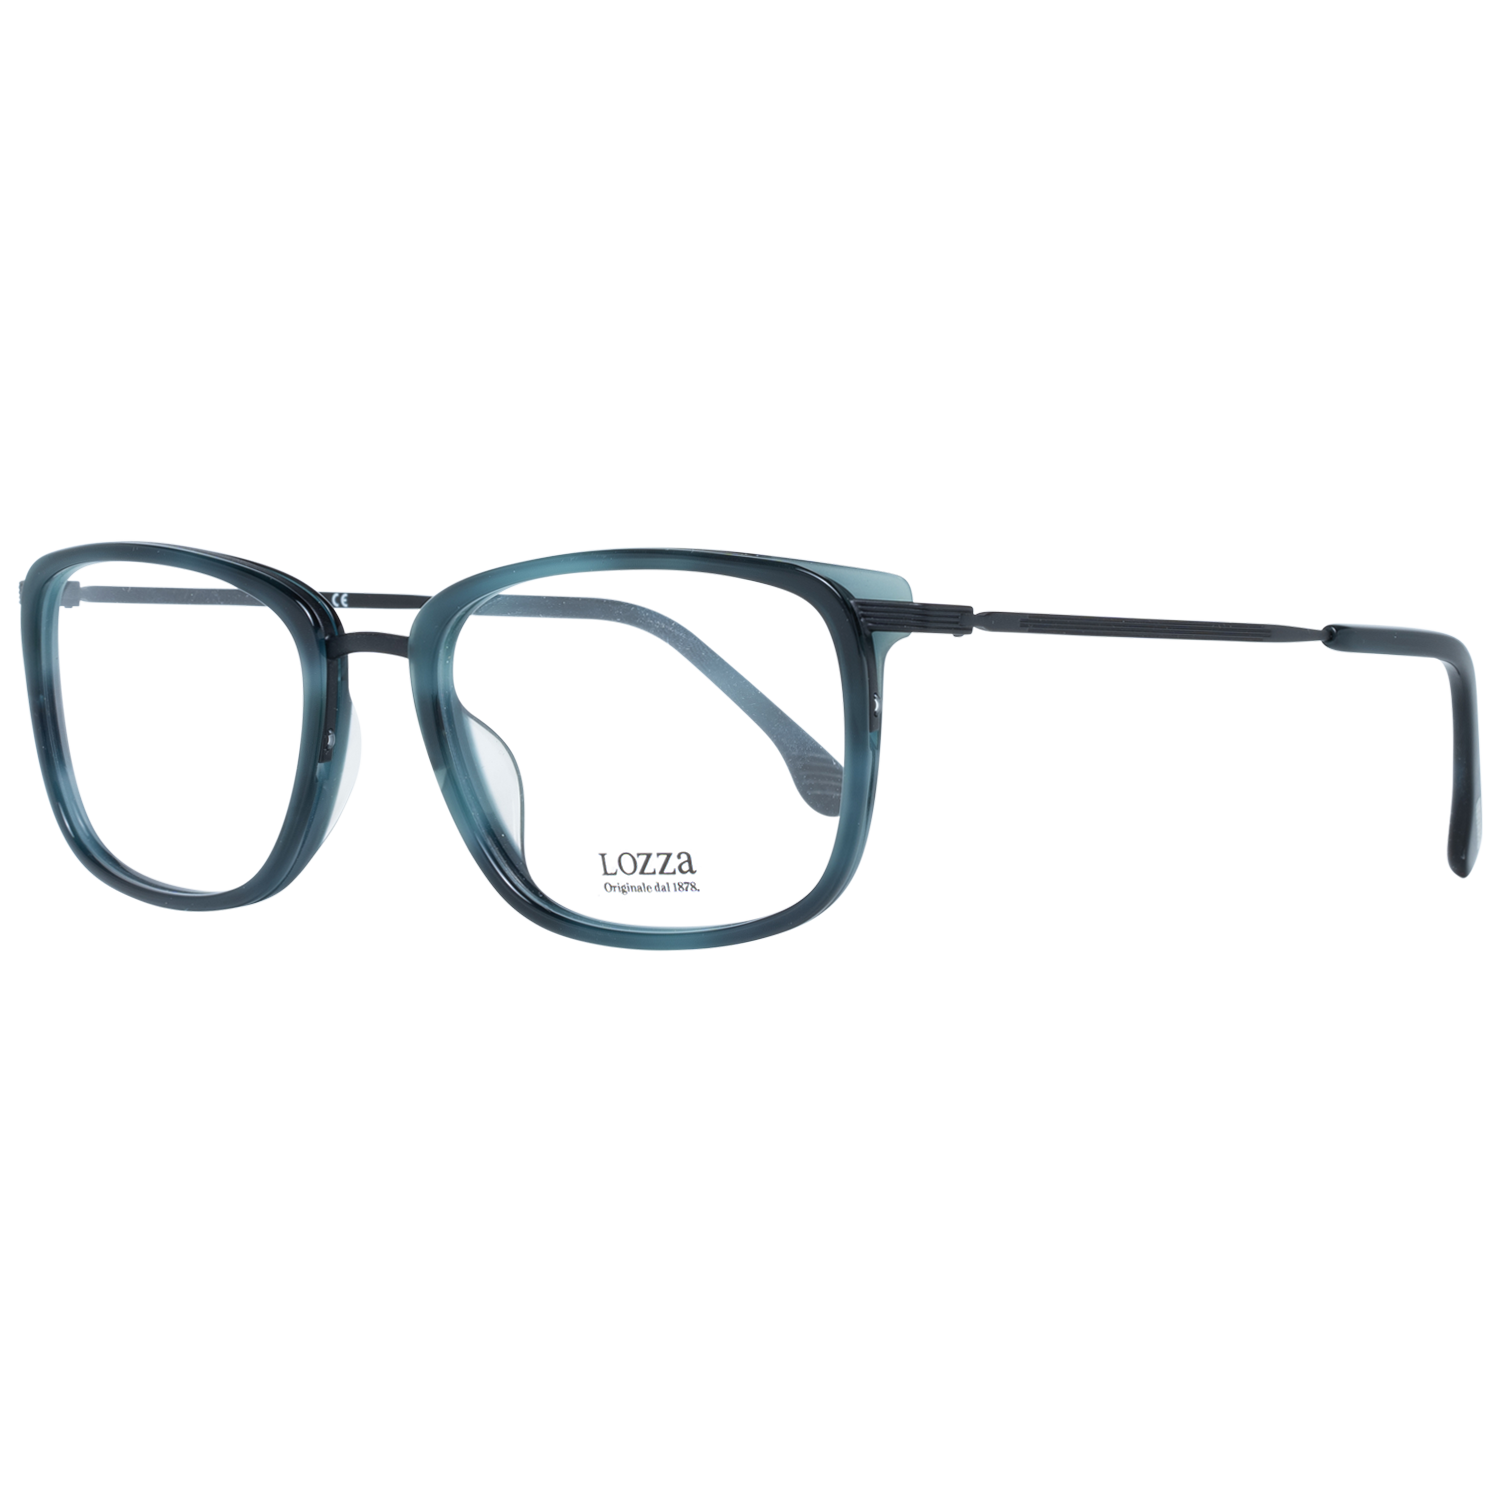 Turquoise Men Optical Frames